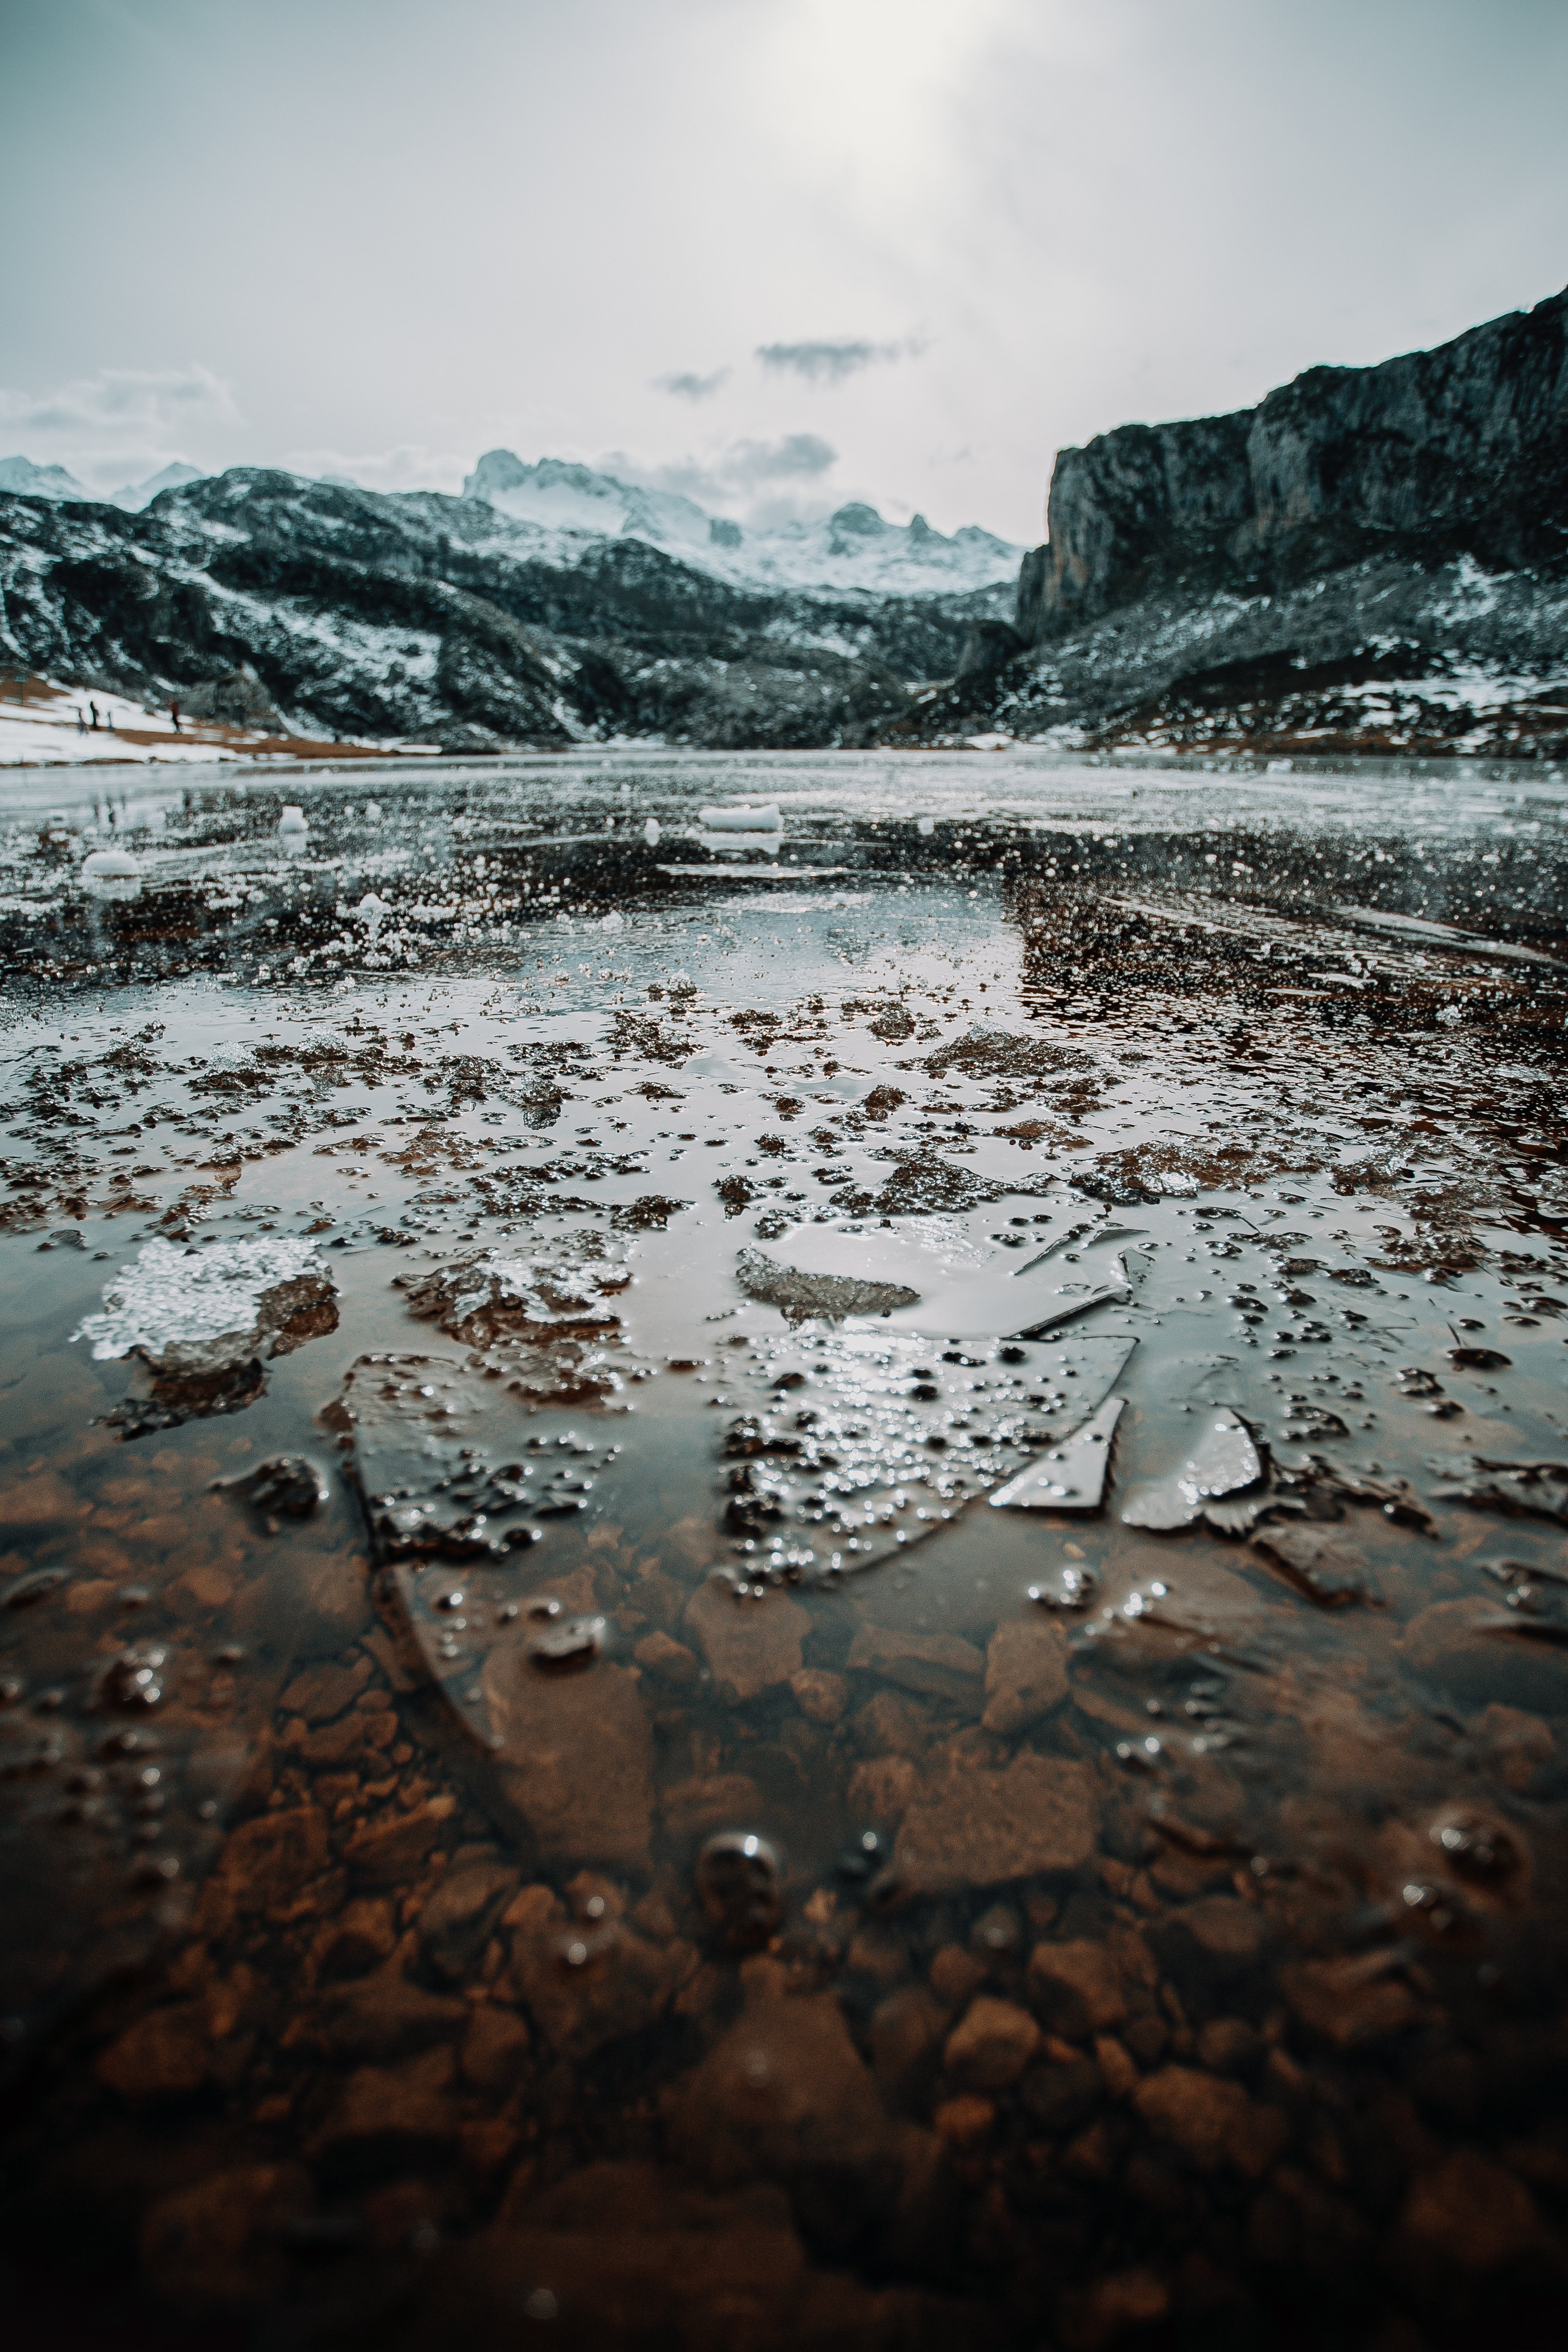 Fragmentos de hielo roto en un lago